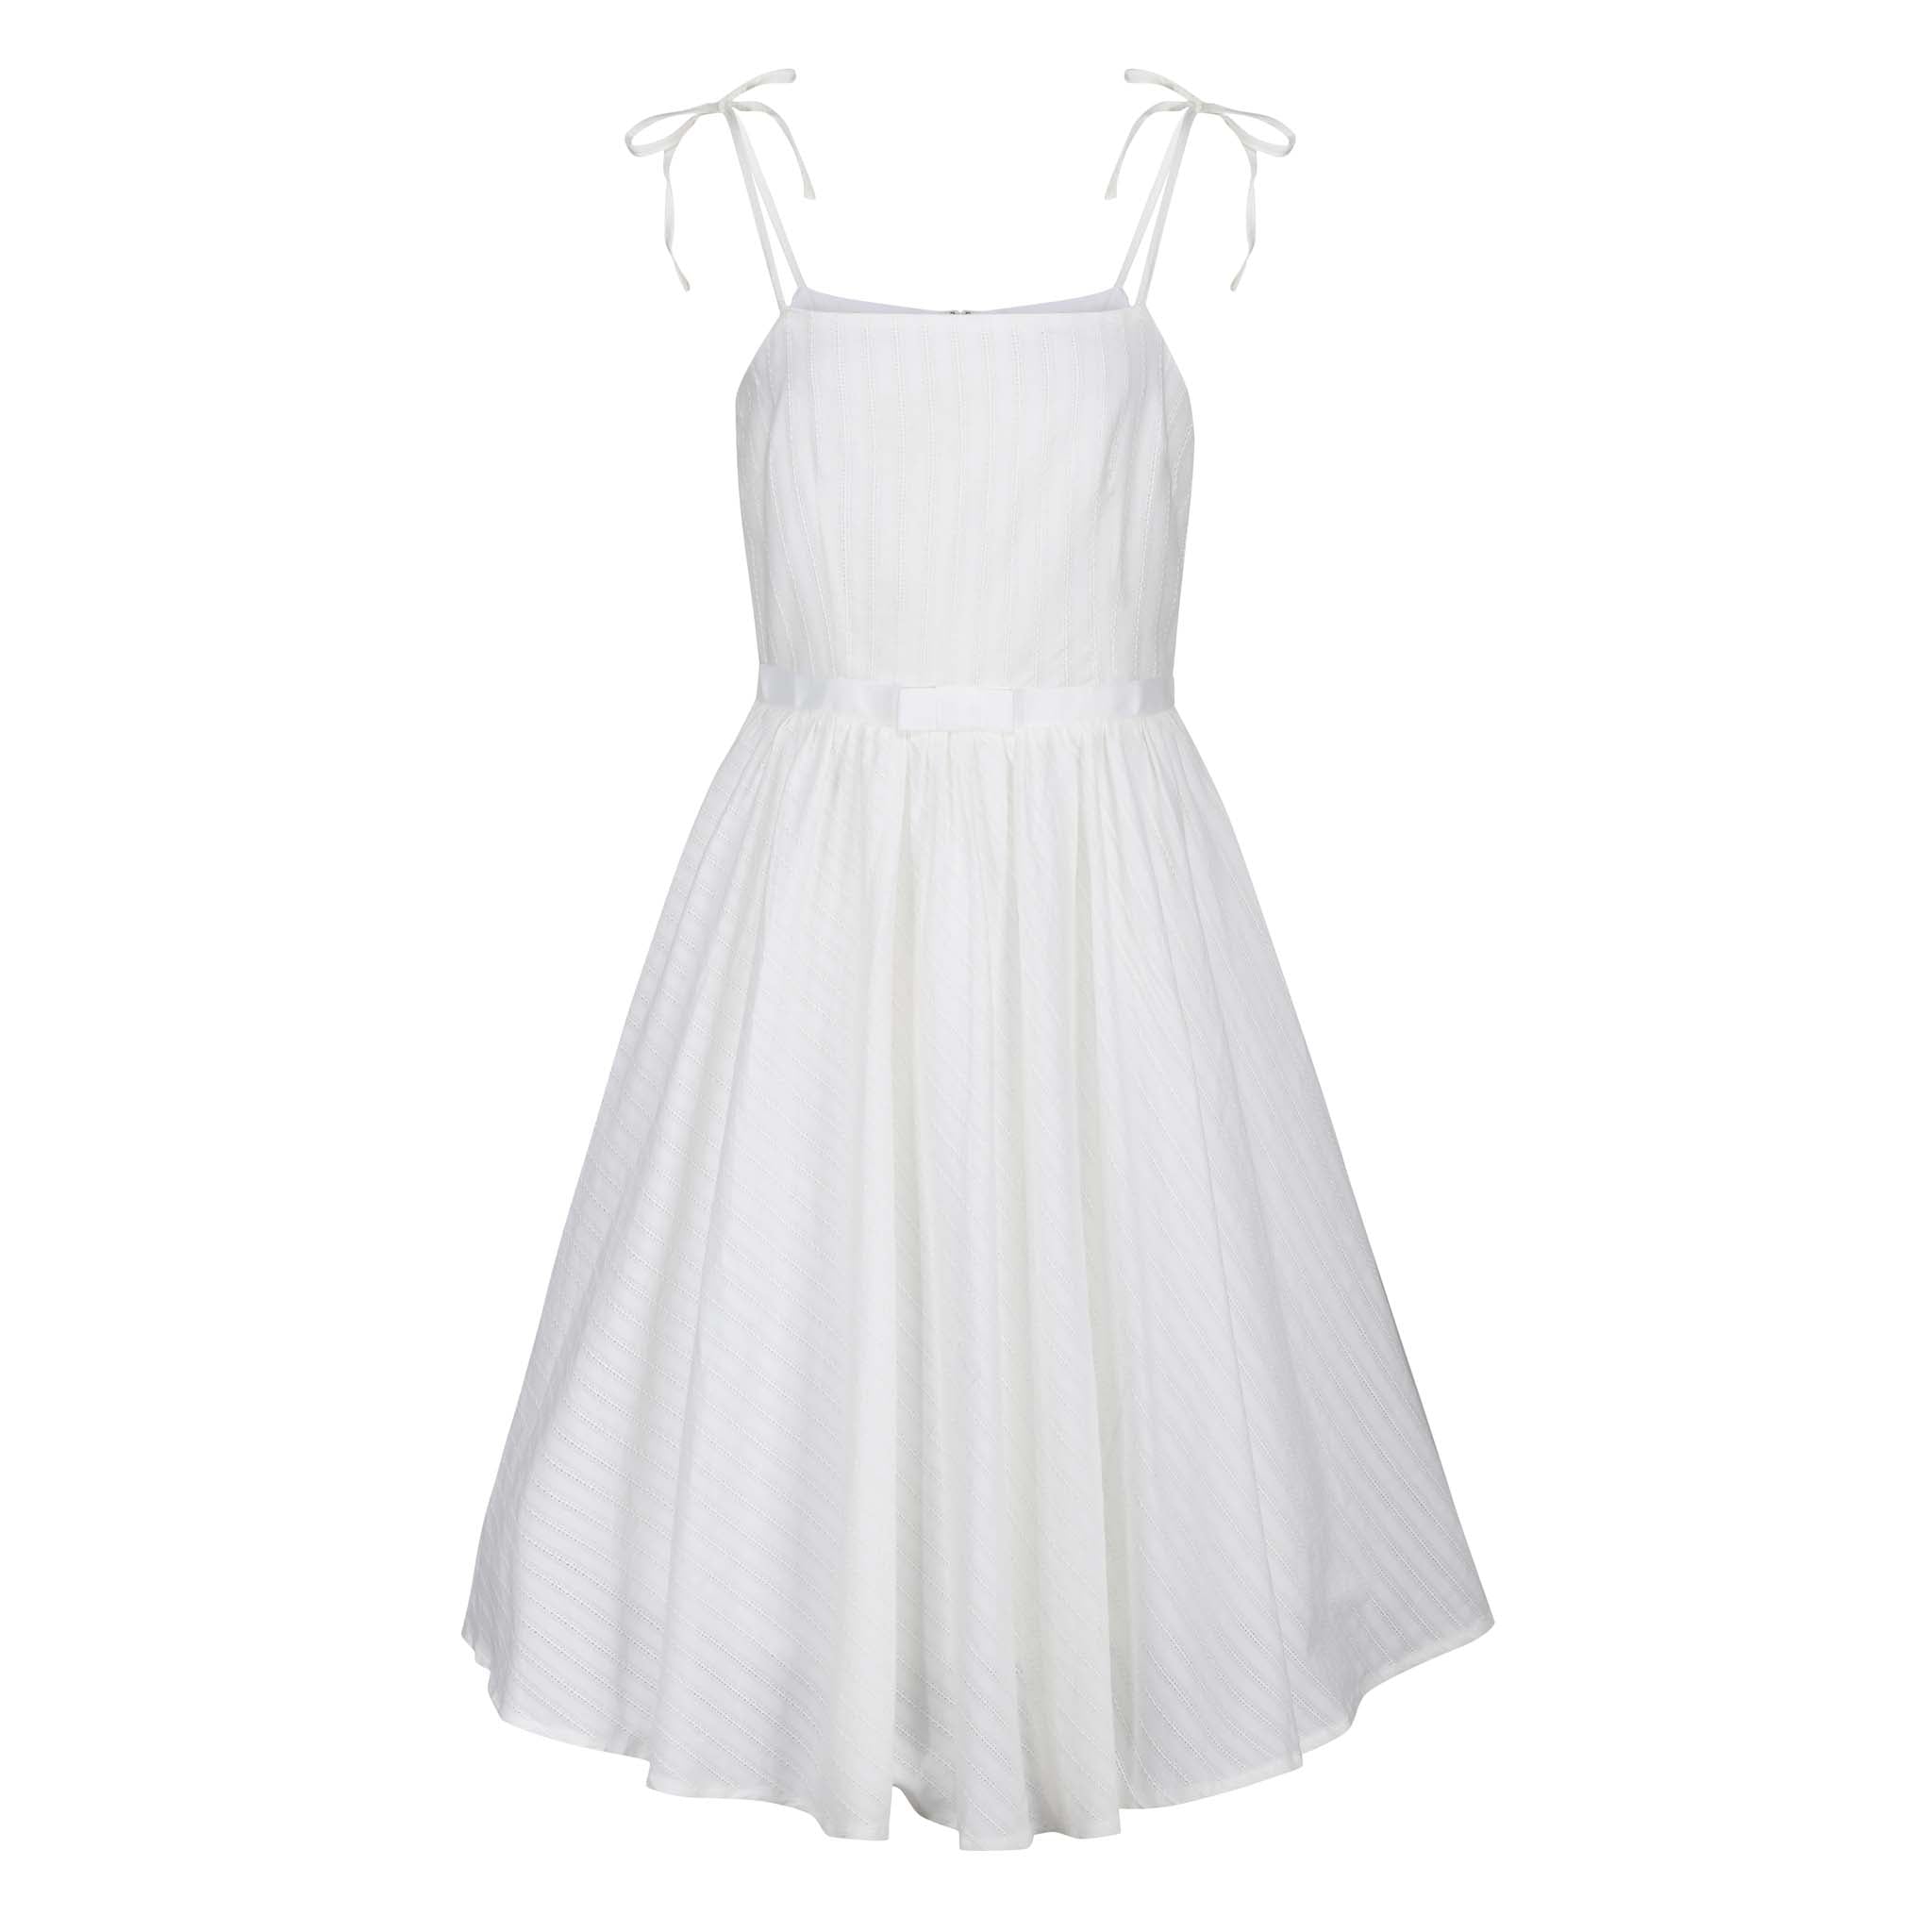 White Floral Print Vintage Rockabilly 50s Swing Dress